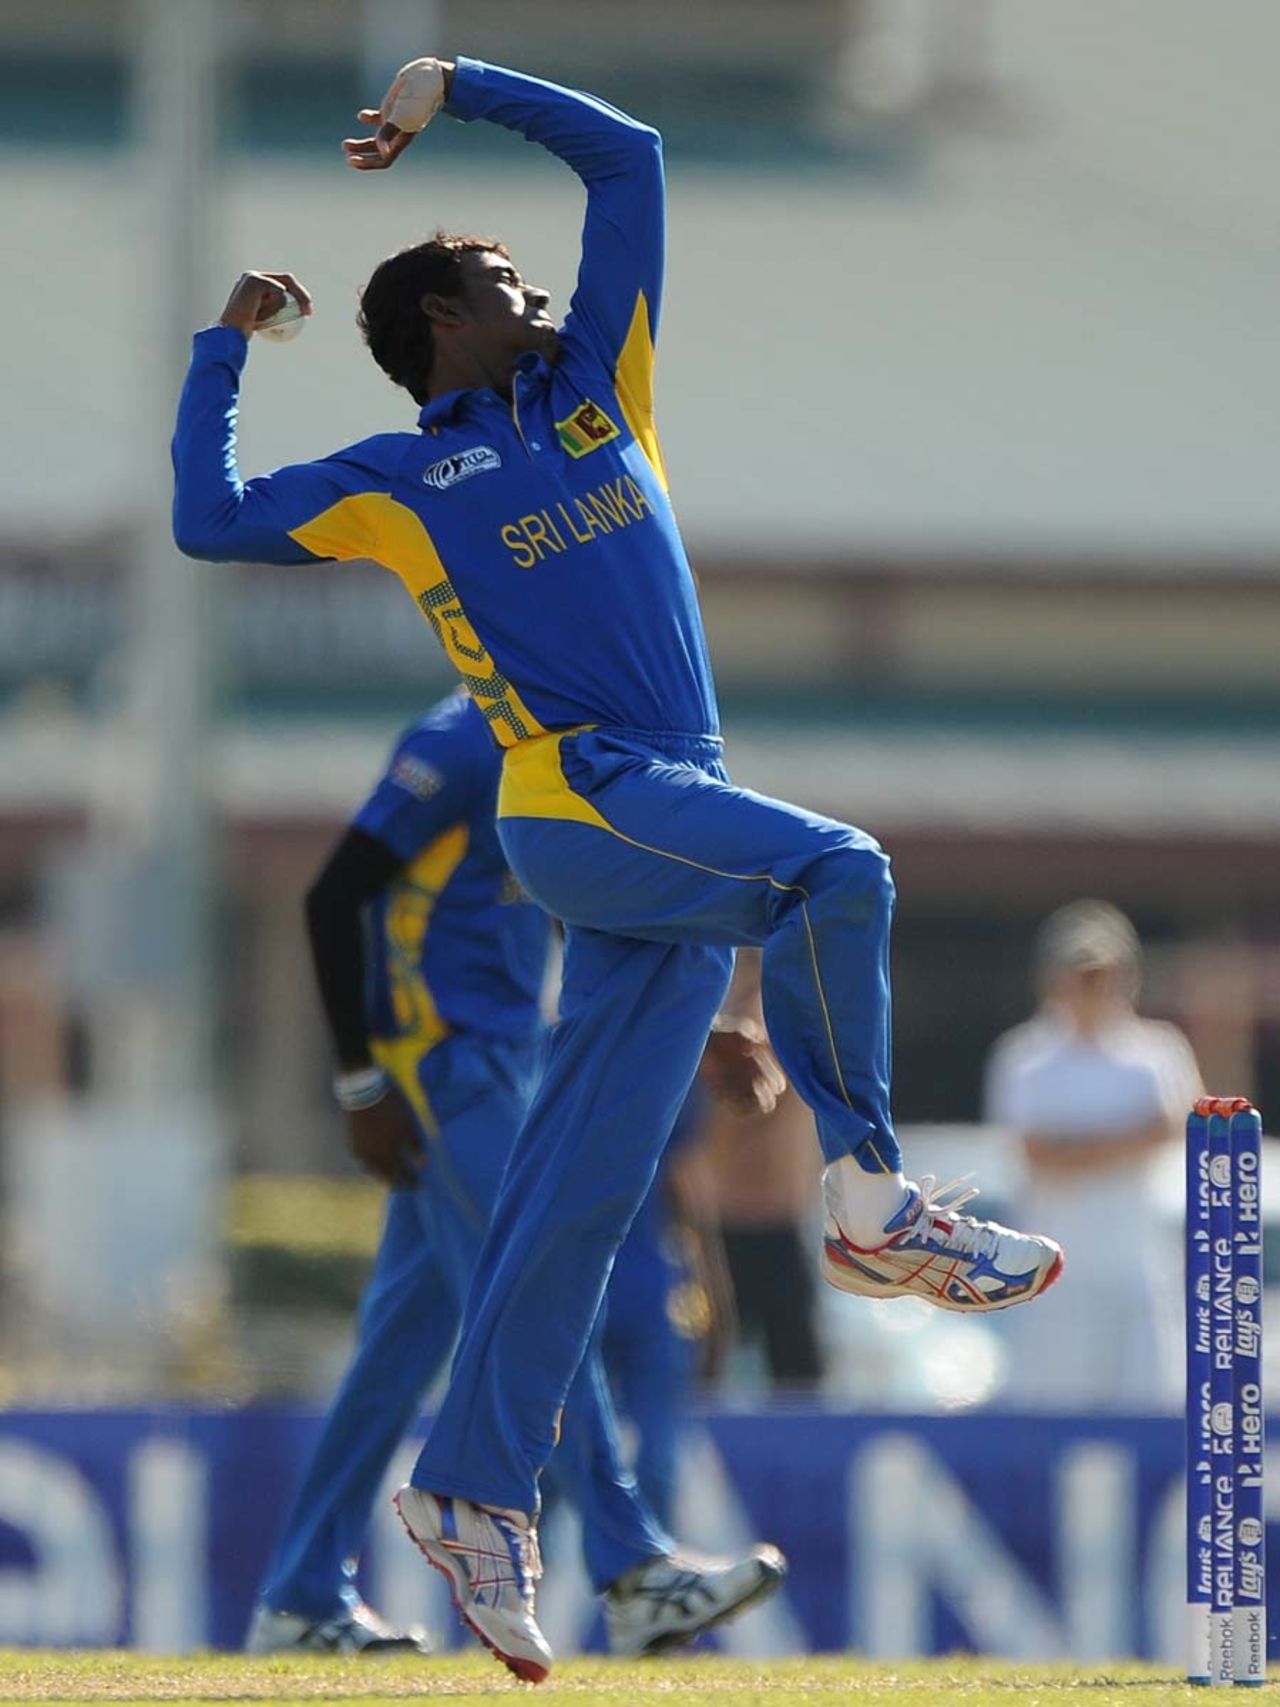 Tharindu Kaushal registered Sri Lanka's best bowling figures with 3 for 28, South Africa v Sri Lanka, Group D, ICC Under-19 World Cup, Brisbane, August 15, 2012